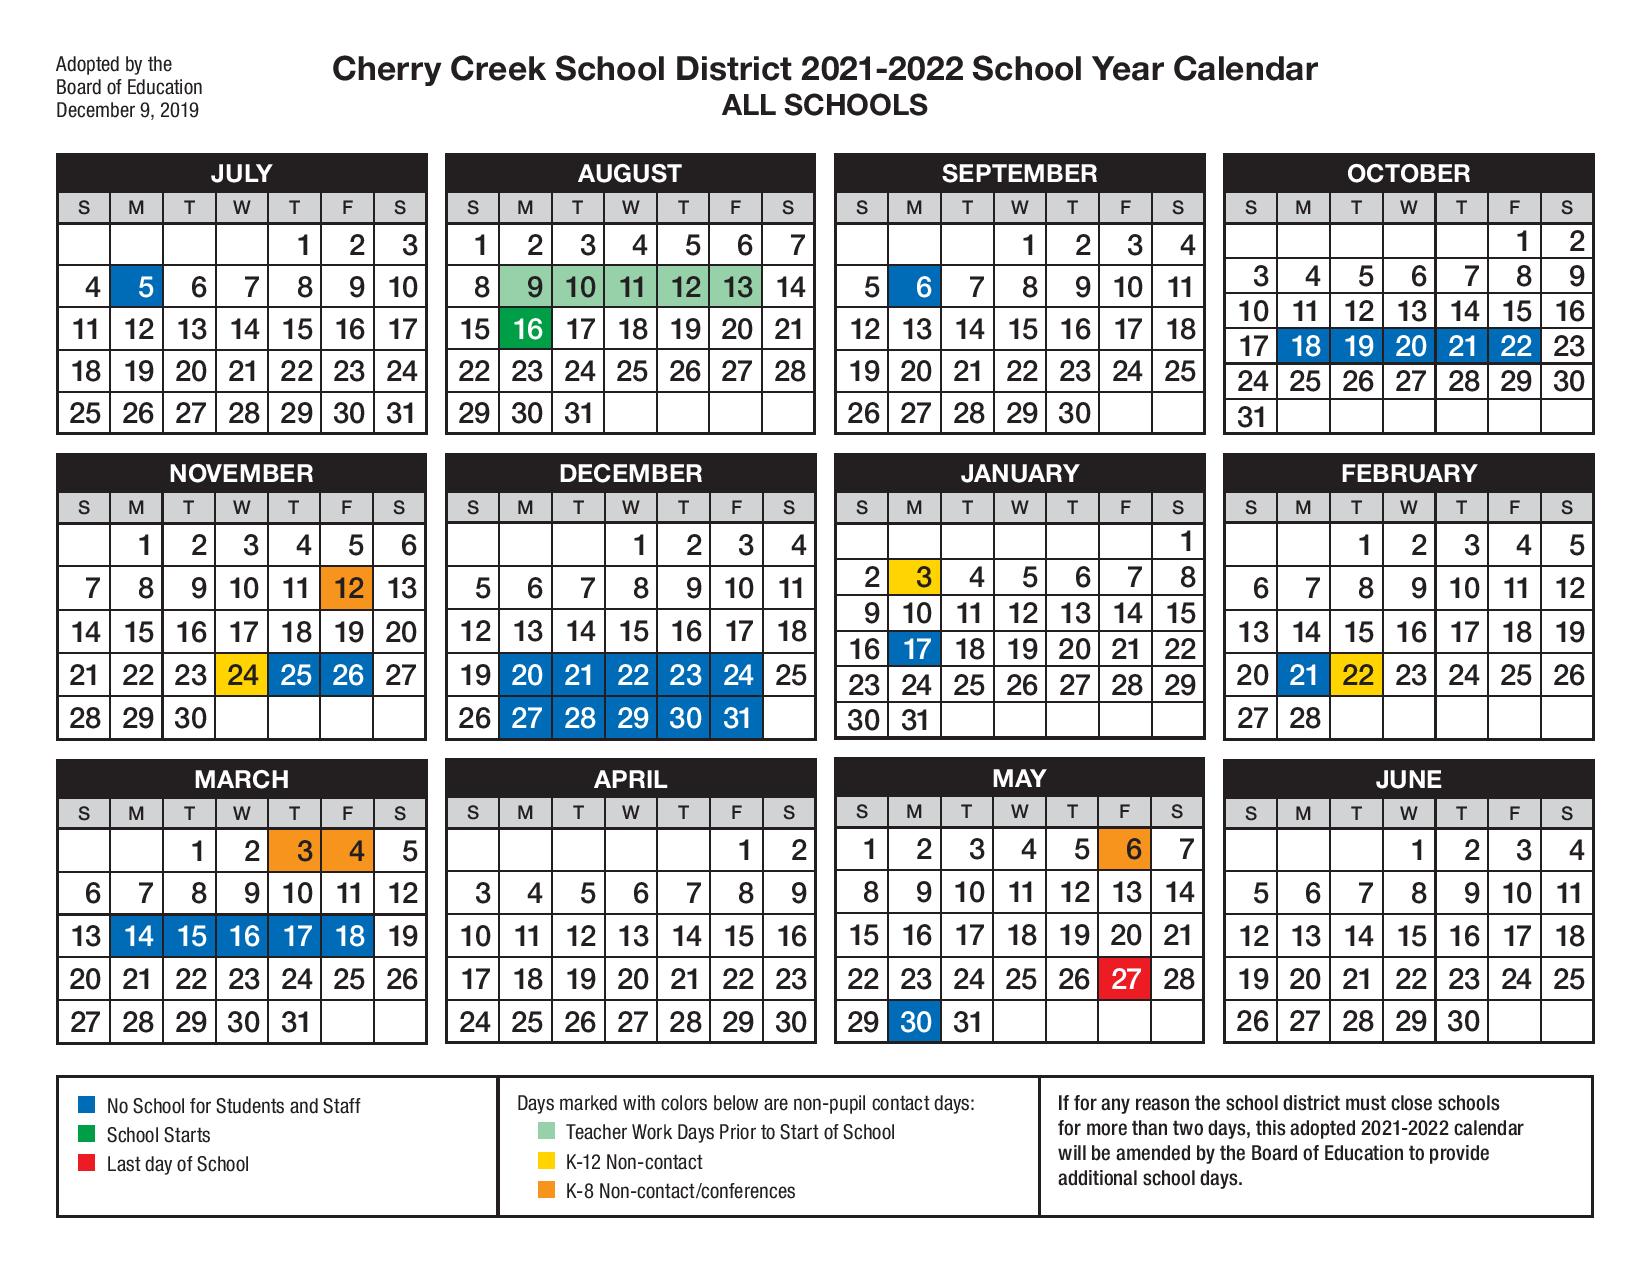 Cherry Creek School District Calendar & Holidays 2021-2022